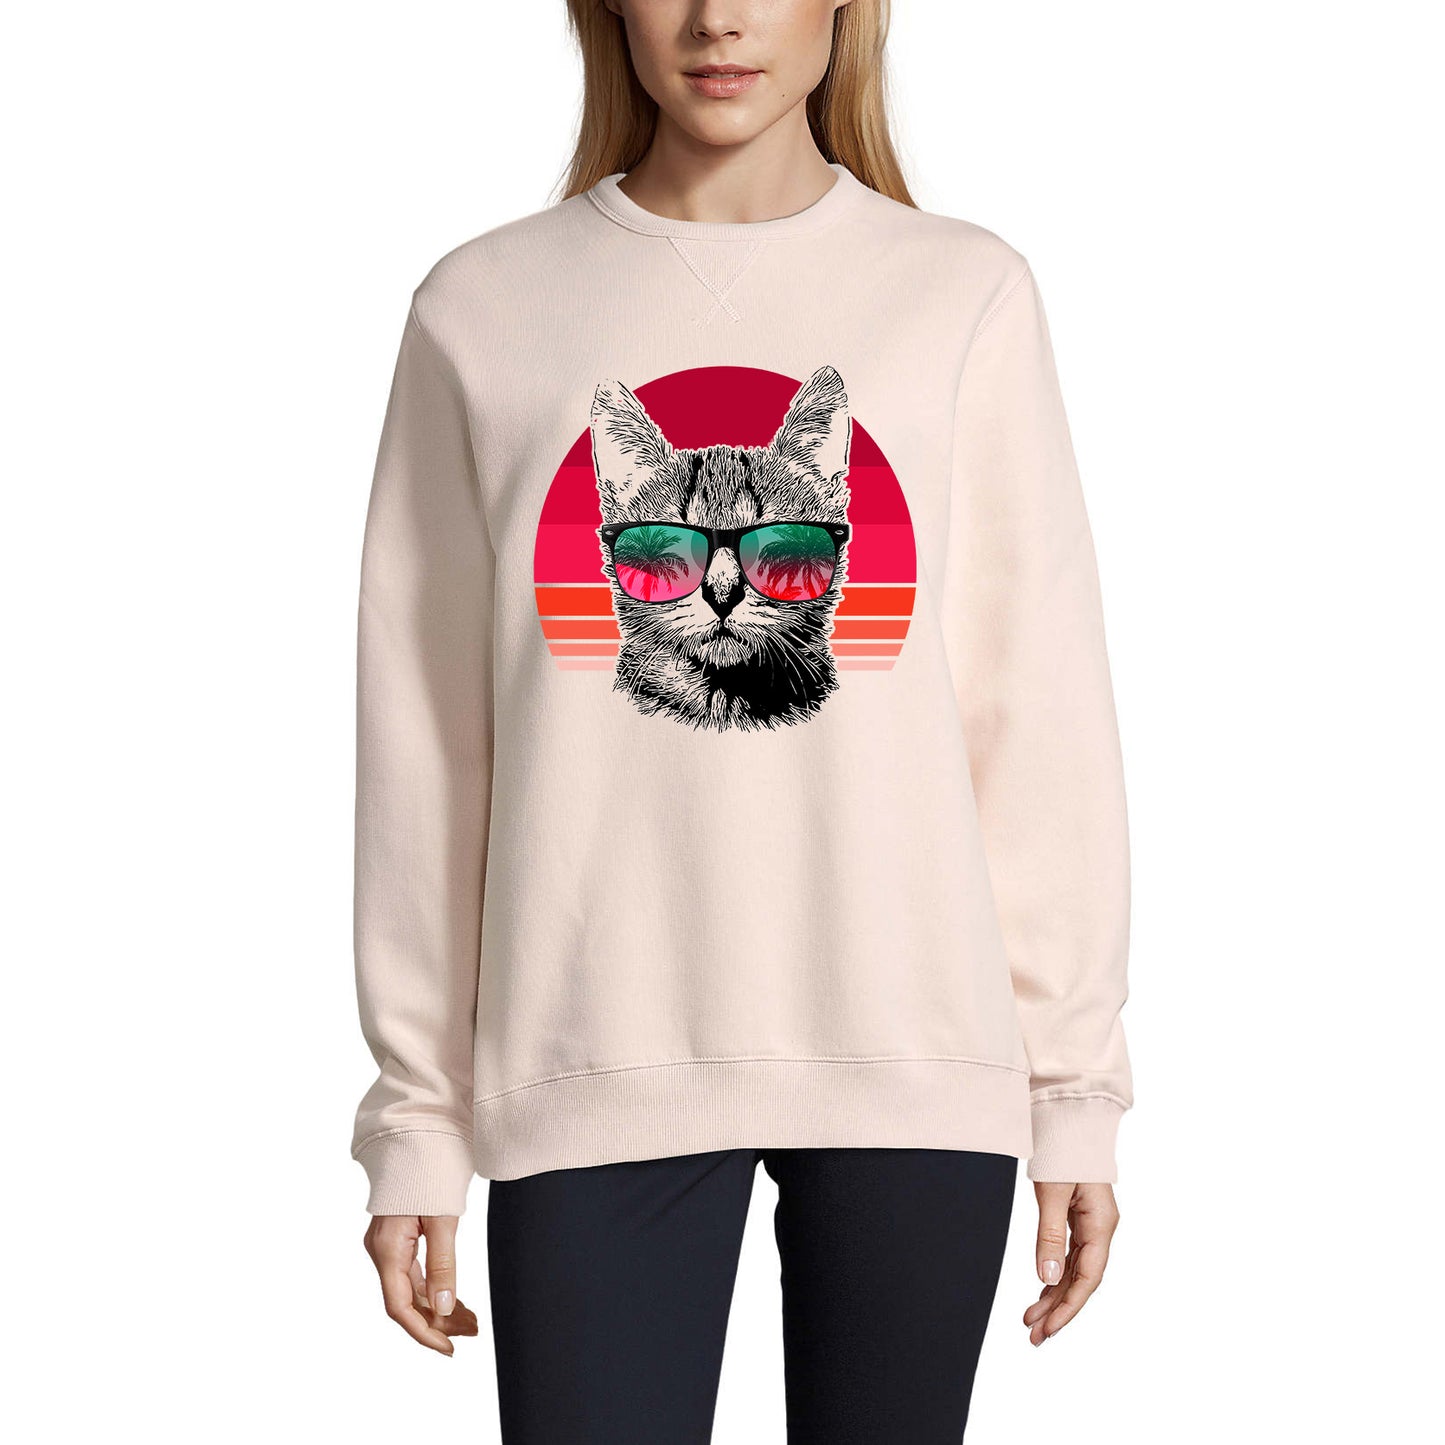 ULTRABASIC Women's Sweatshirt Cool Cat In Sunset Retro - Kitten Funny Sweater for Ladies